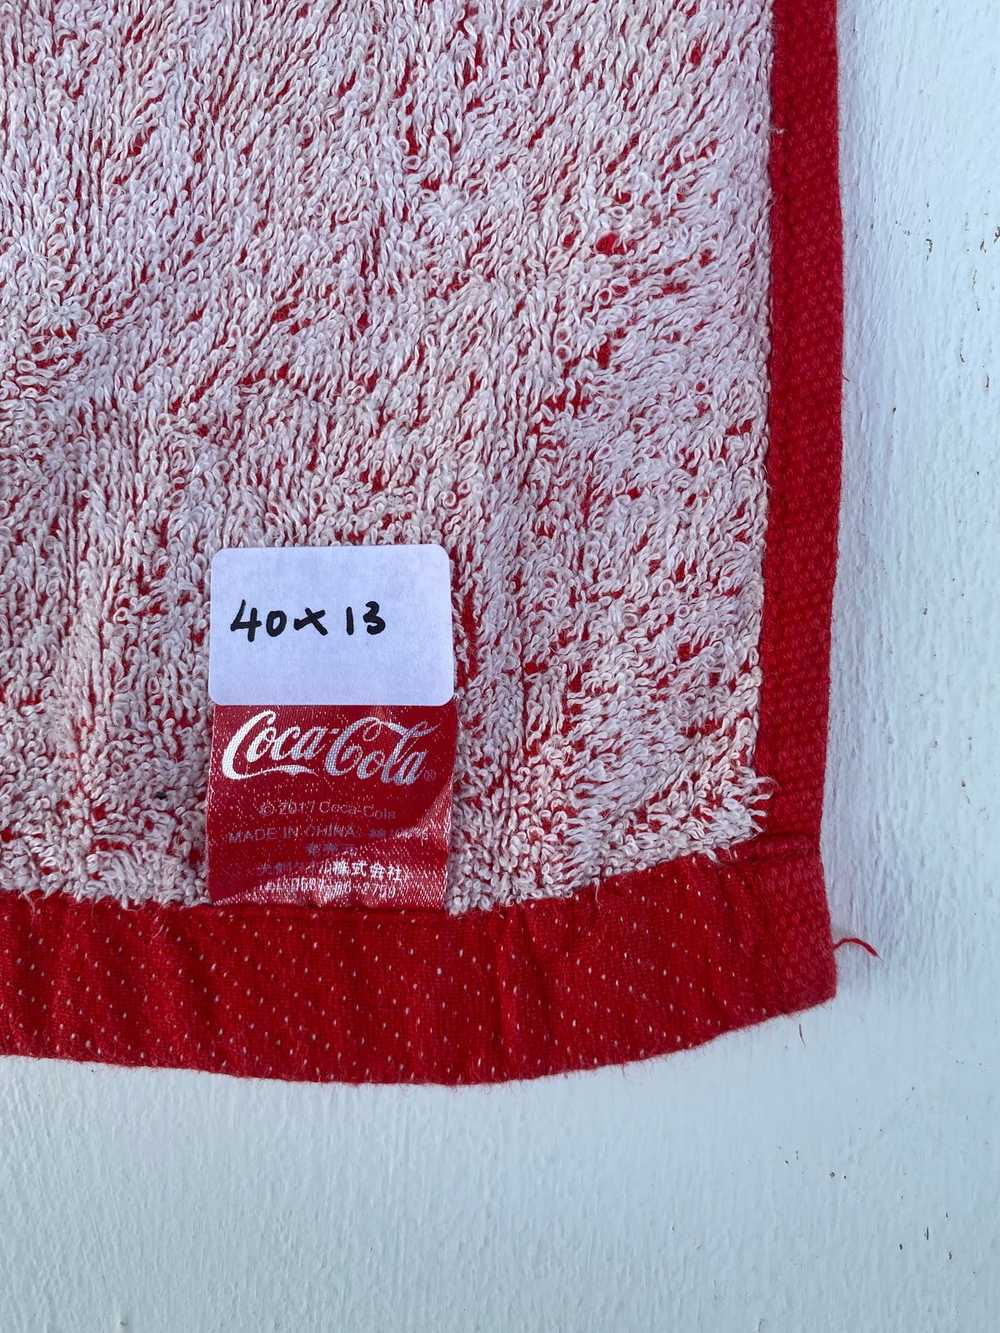 Coca Cola COKE Coca-cola hand / face towel - image 3